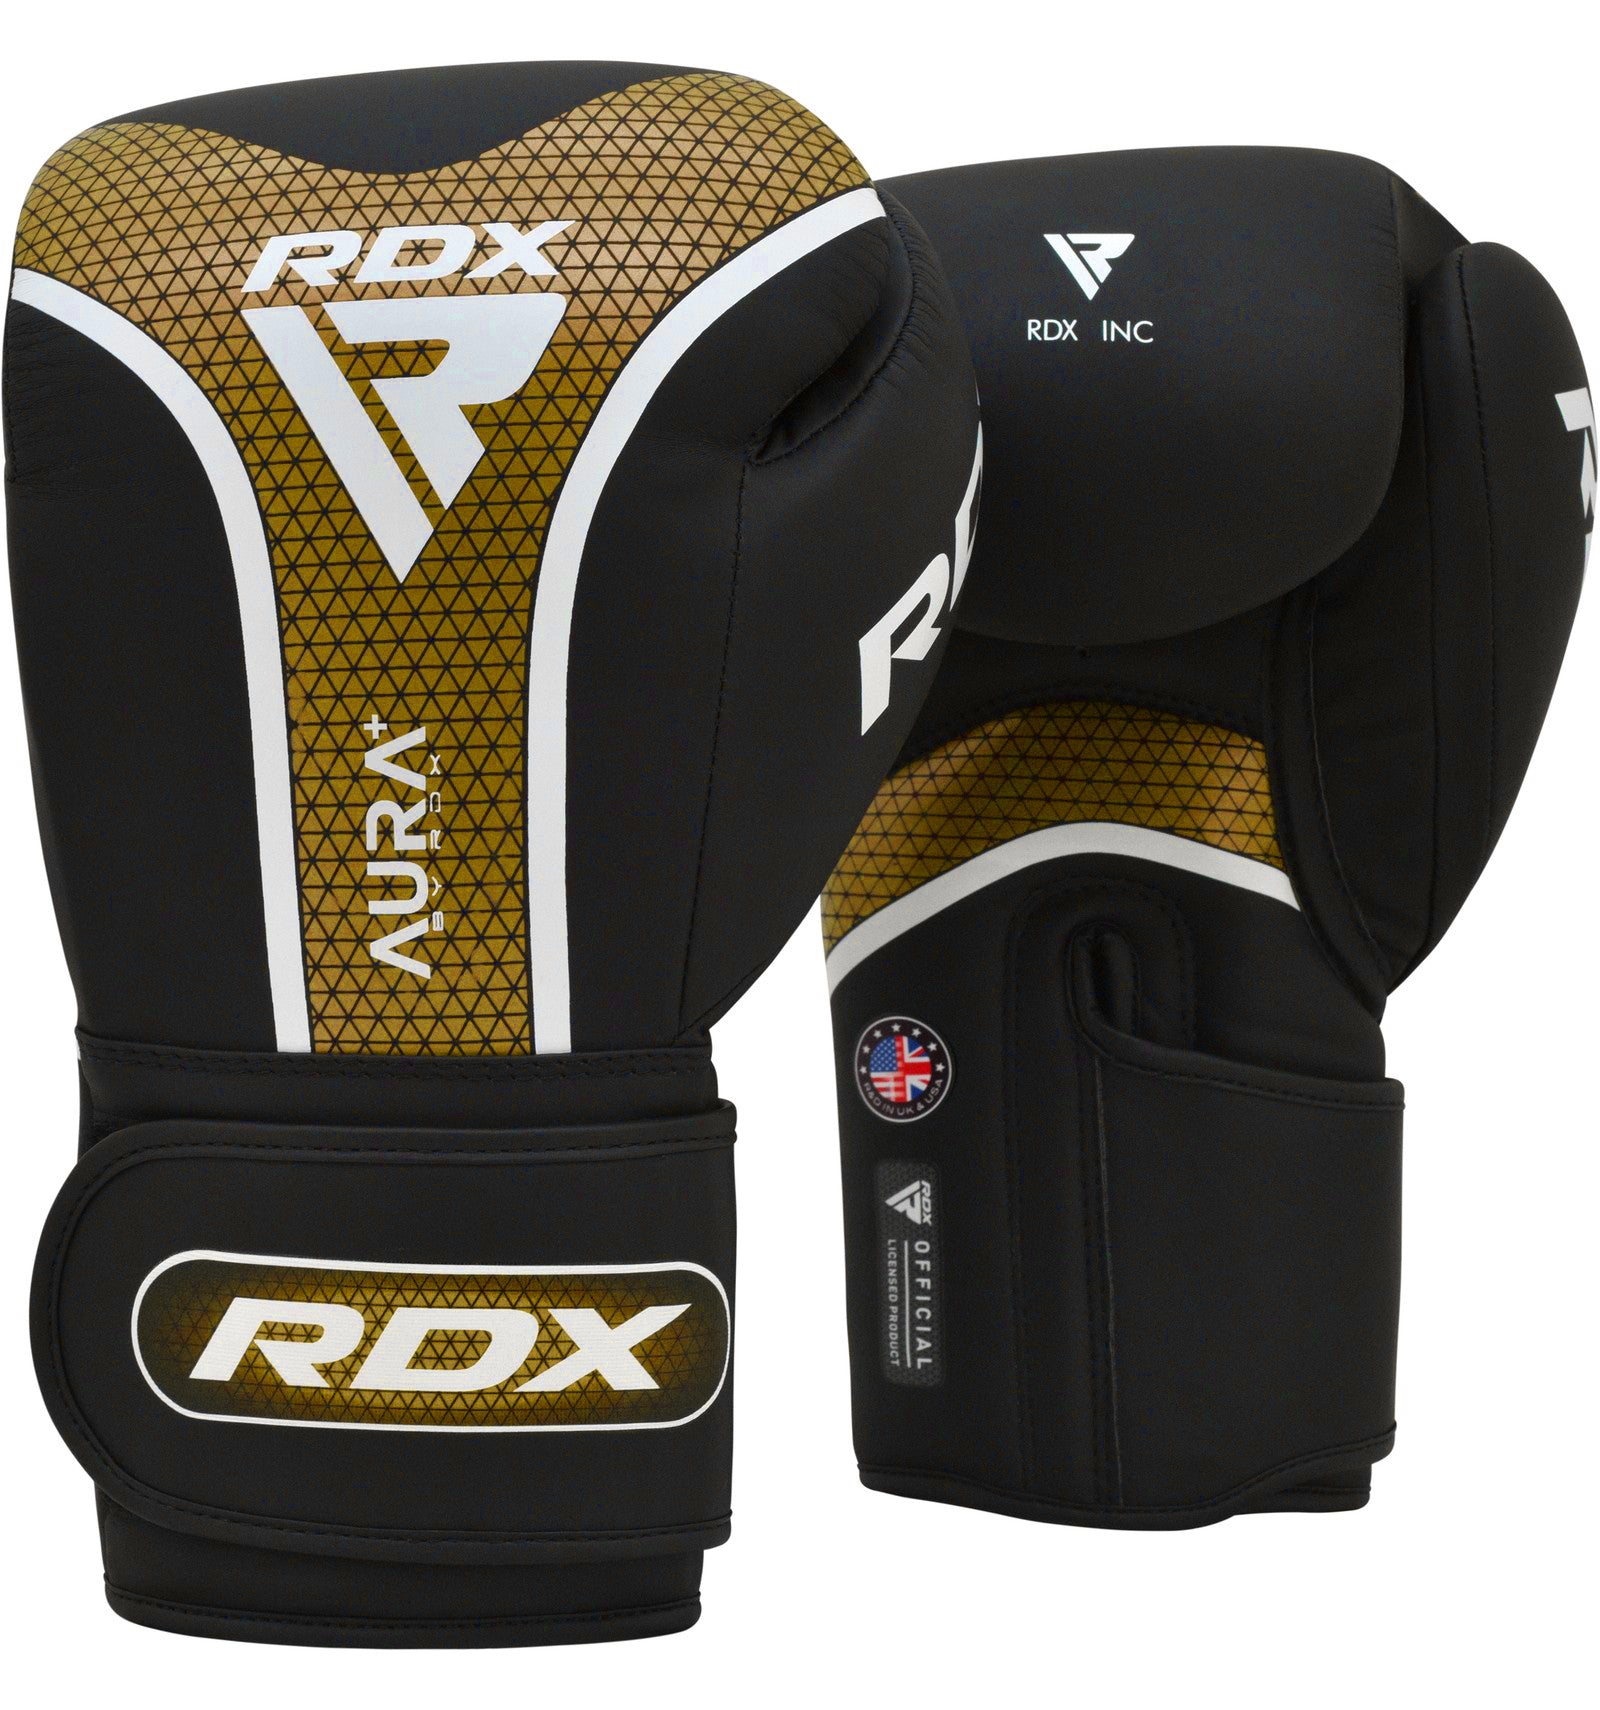 RDX T17 Aura Nova Tech Boxing Sparring Gloves - Golden - 16oz - Shock Absorbing Foam, Moisture Wicking for Heavy Punching Bag Training, Kickboxing, Muay Thai, Sparring - Pro-Distributing